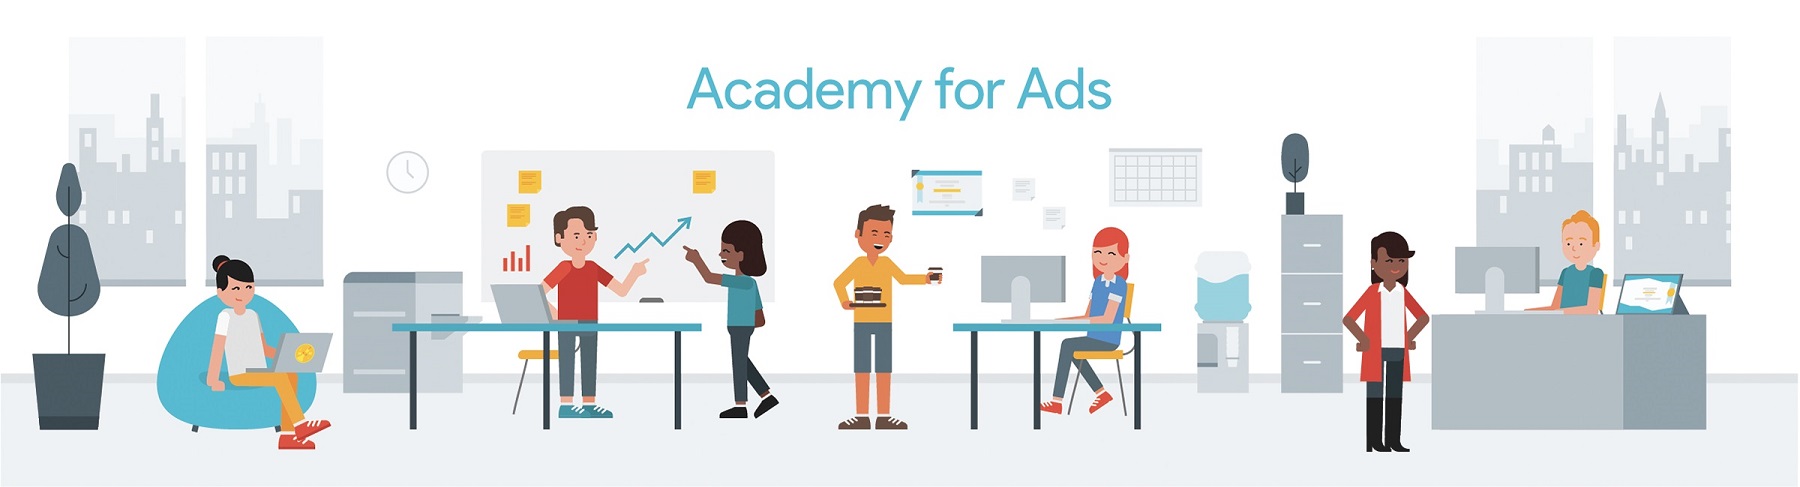 oficina academy for ads